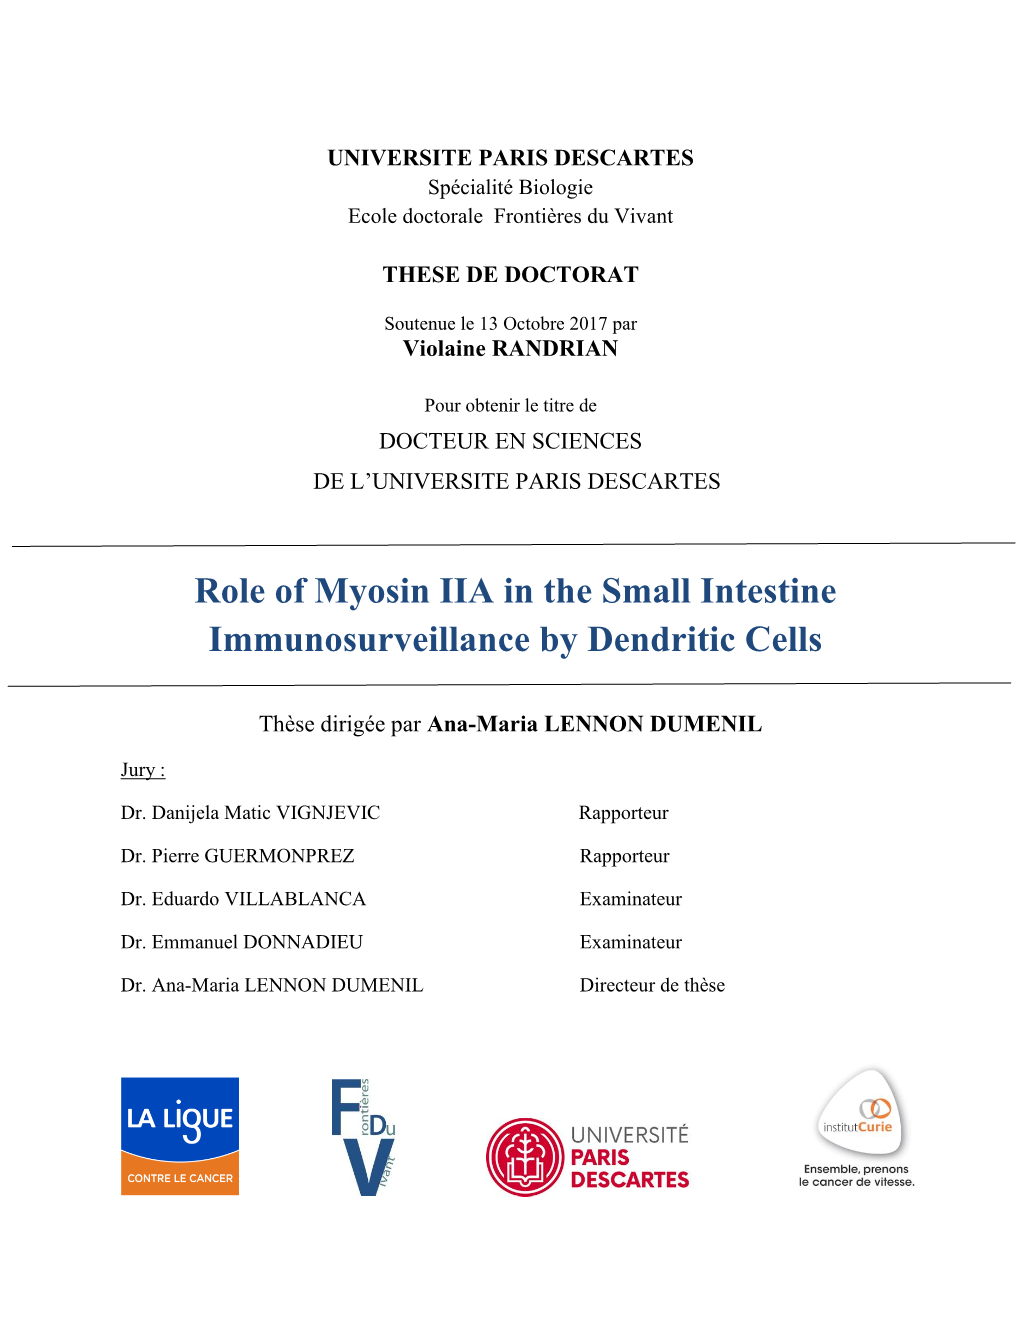 Role of Myosin IIA in the Small Intestine Immunosurveillance by Dendritic Cells